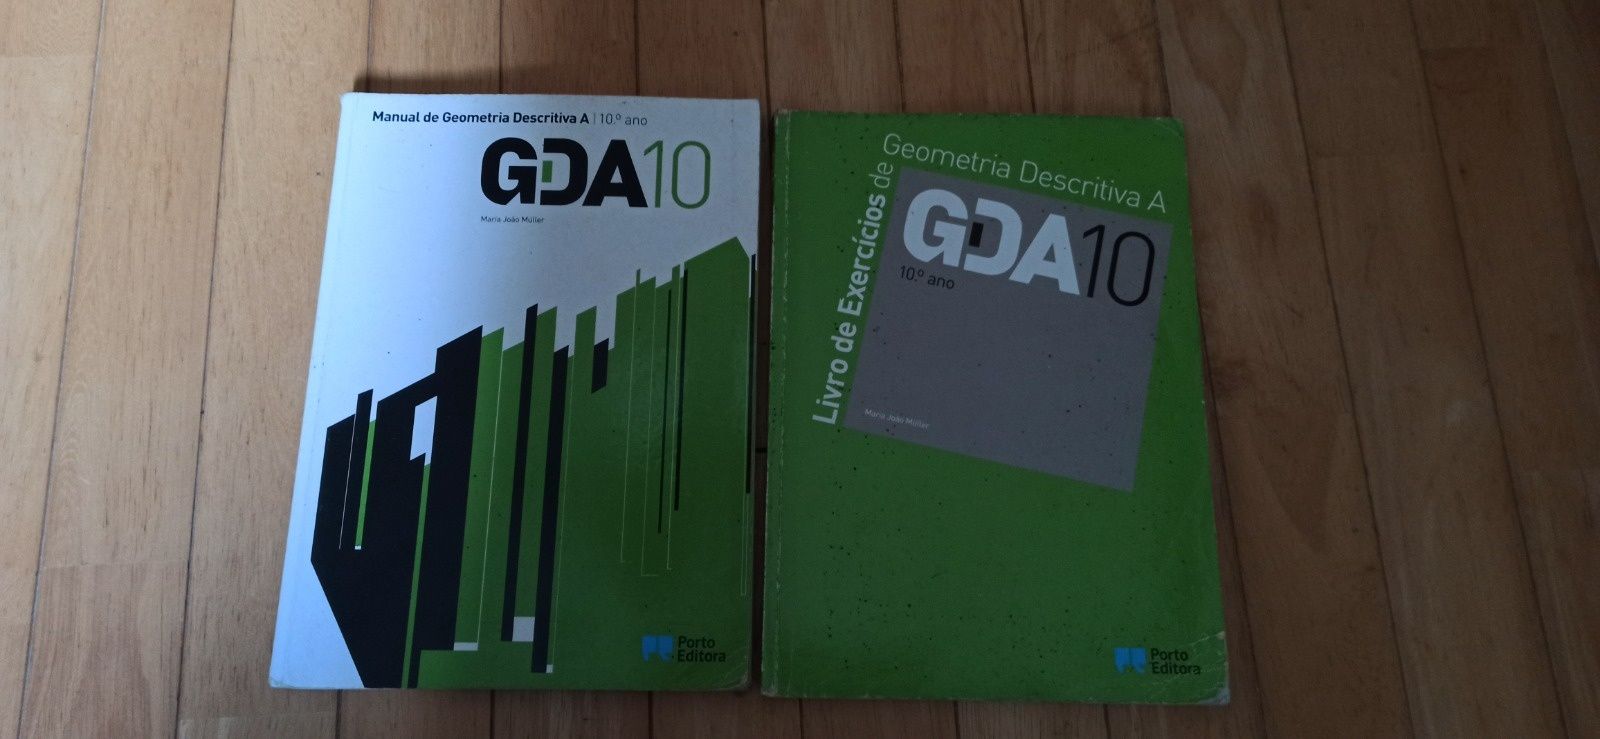 GDA 10 - Geometria Descritiva A